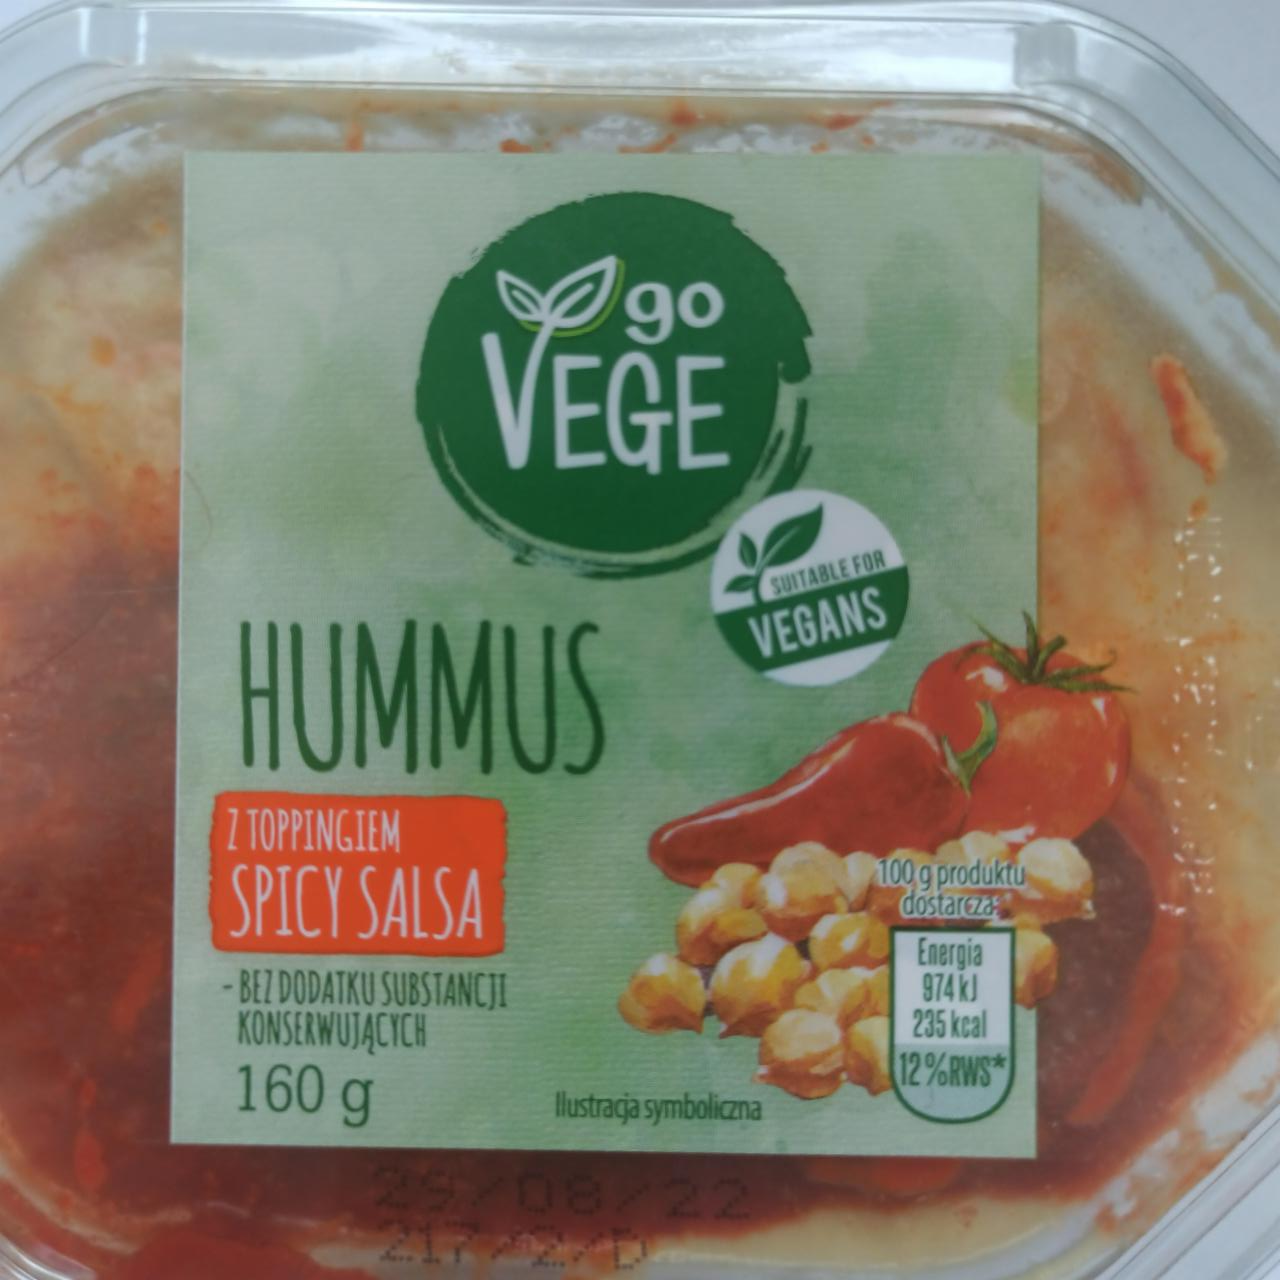 Fotografie - Hummus z toppingiem spicy salsa goVege